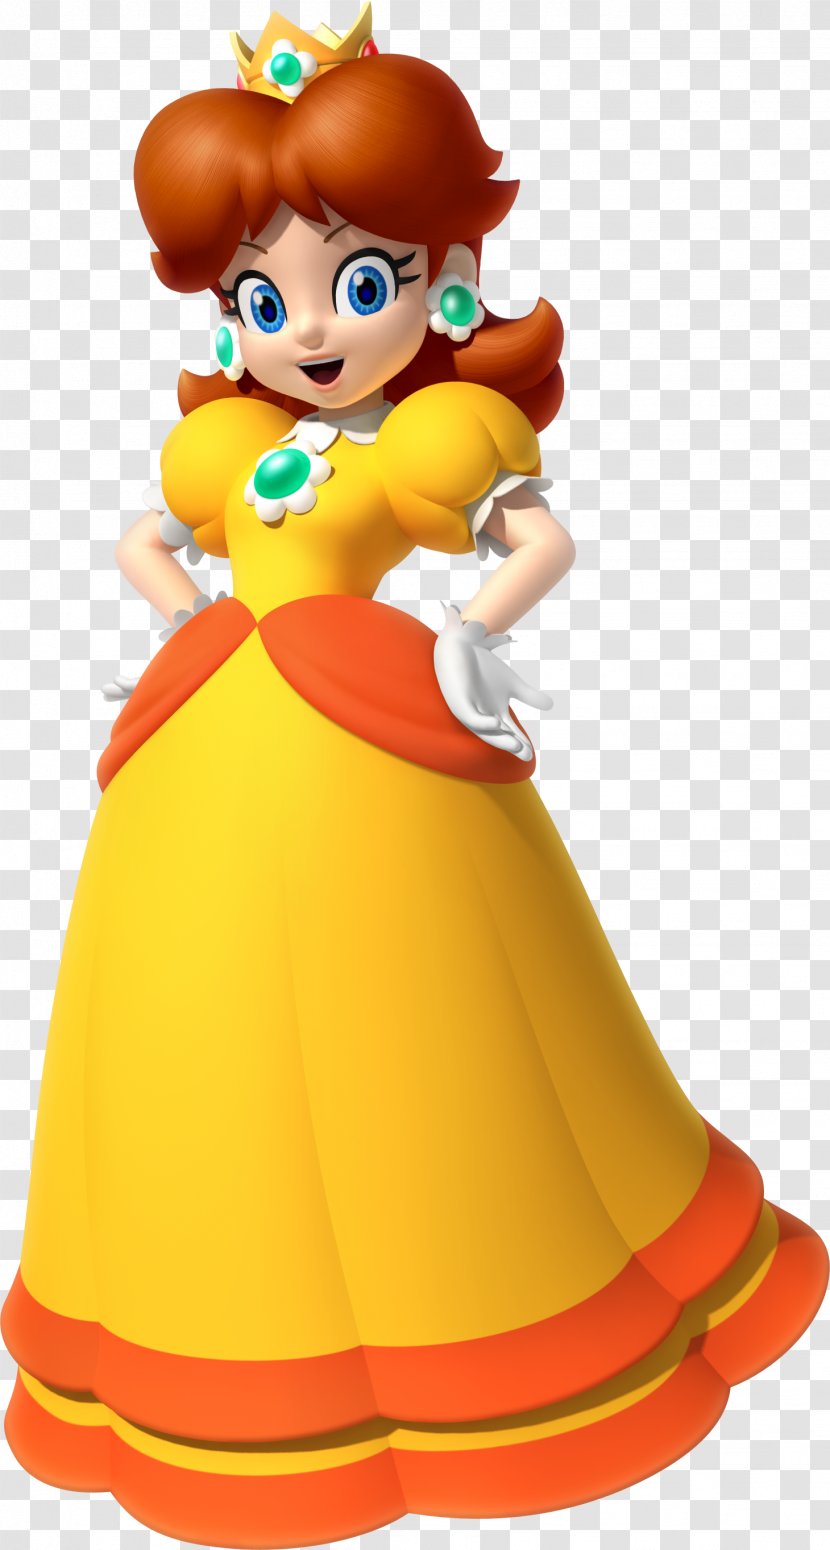 Princess Daisy Super Mario Bros. Peach - Koopalings Transparent PNG